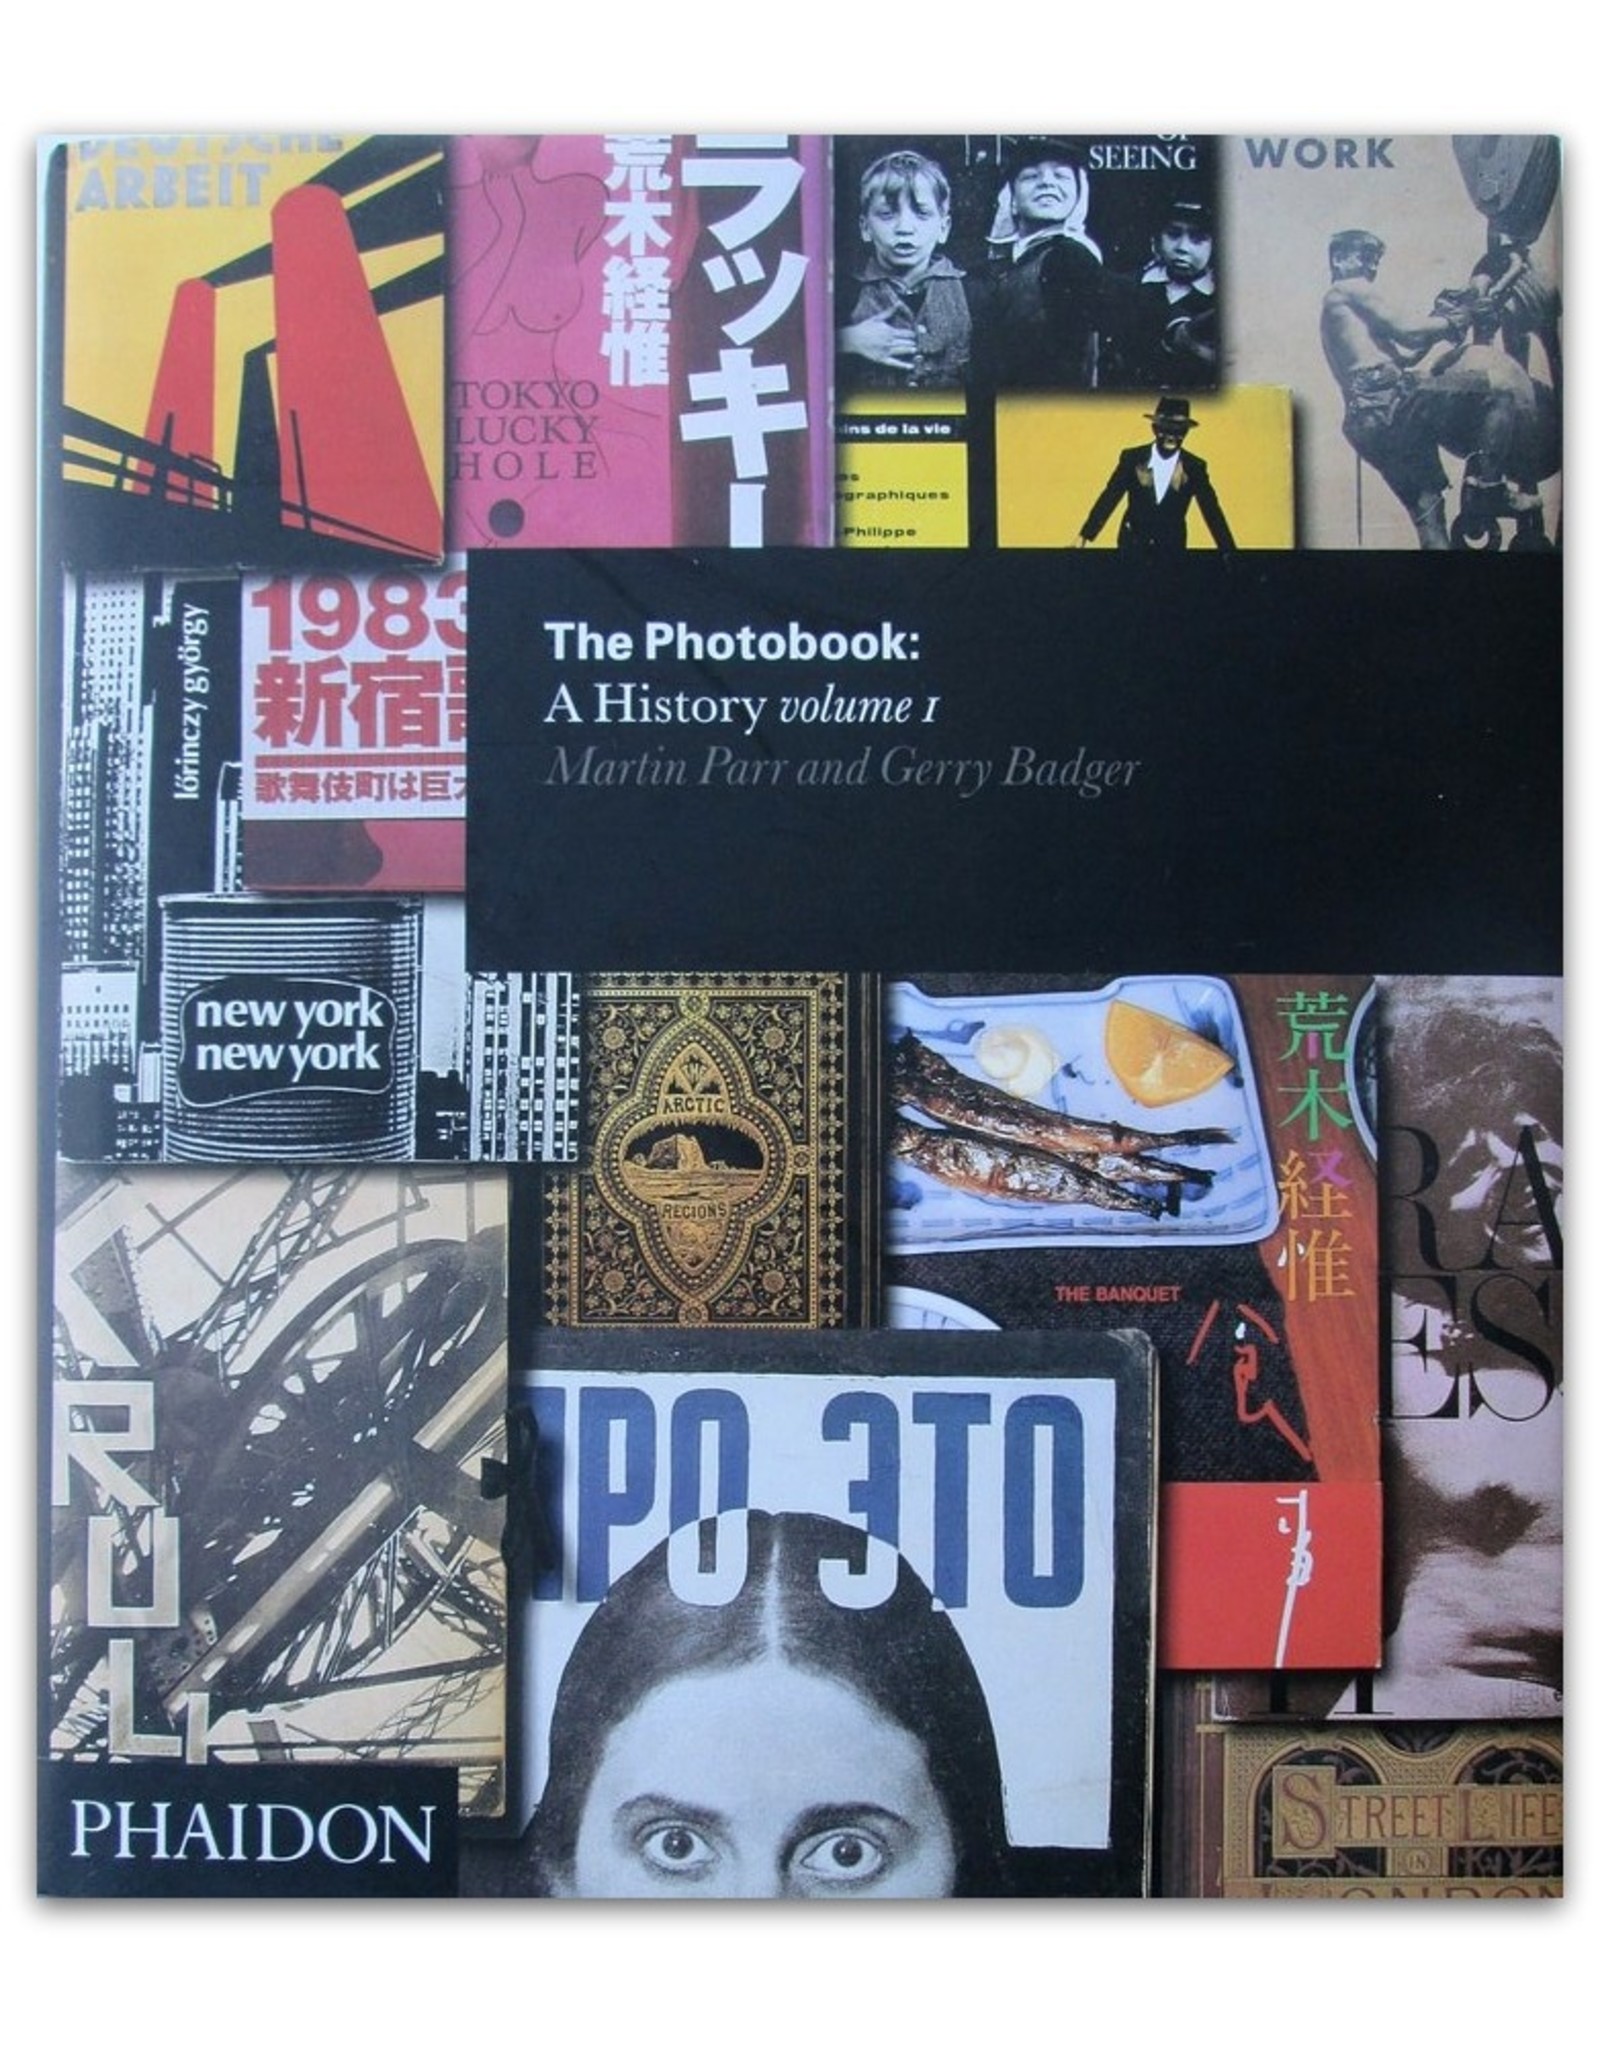 Martin Parr & Gerry Badger - The Photobook: A History. Volume I